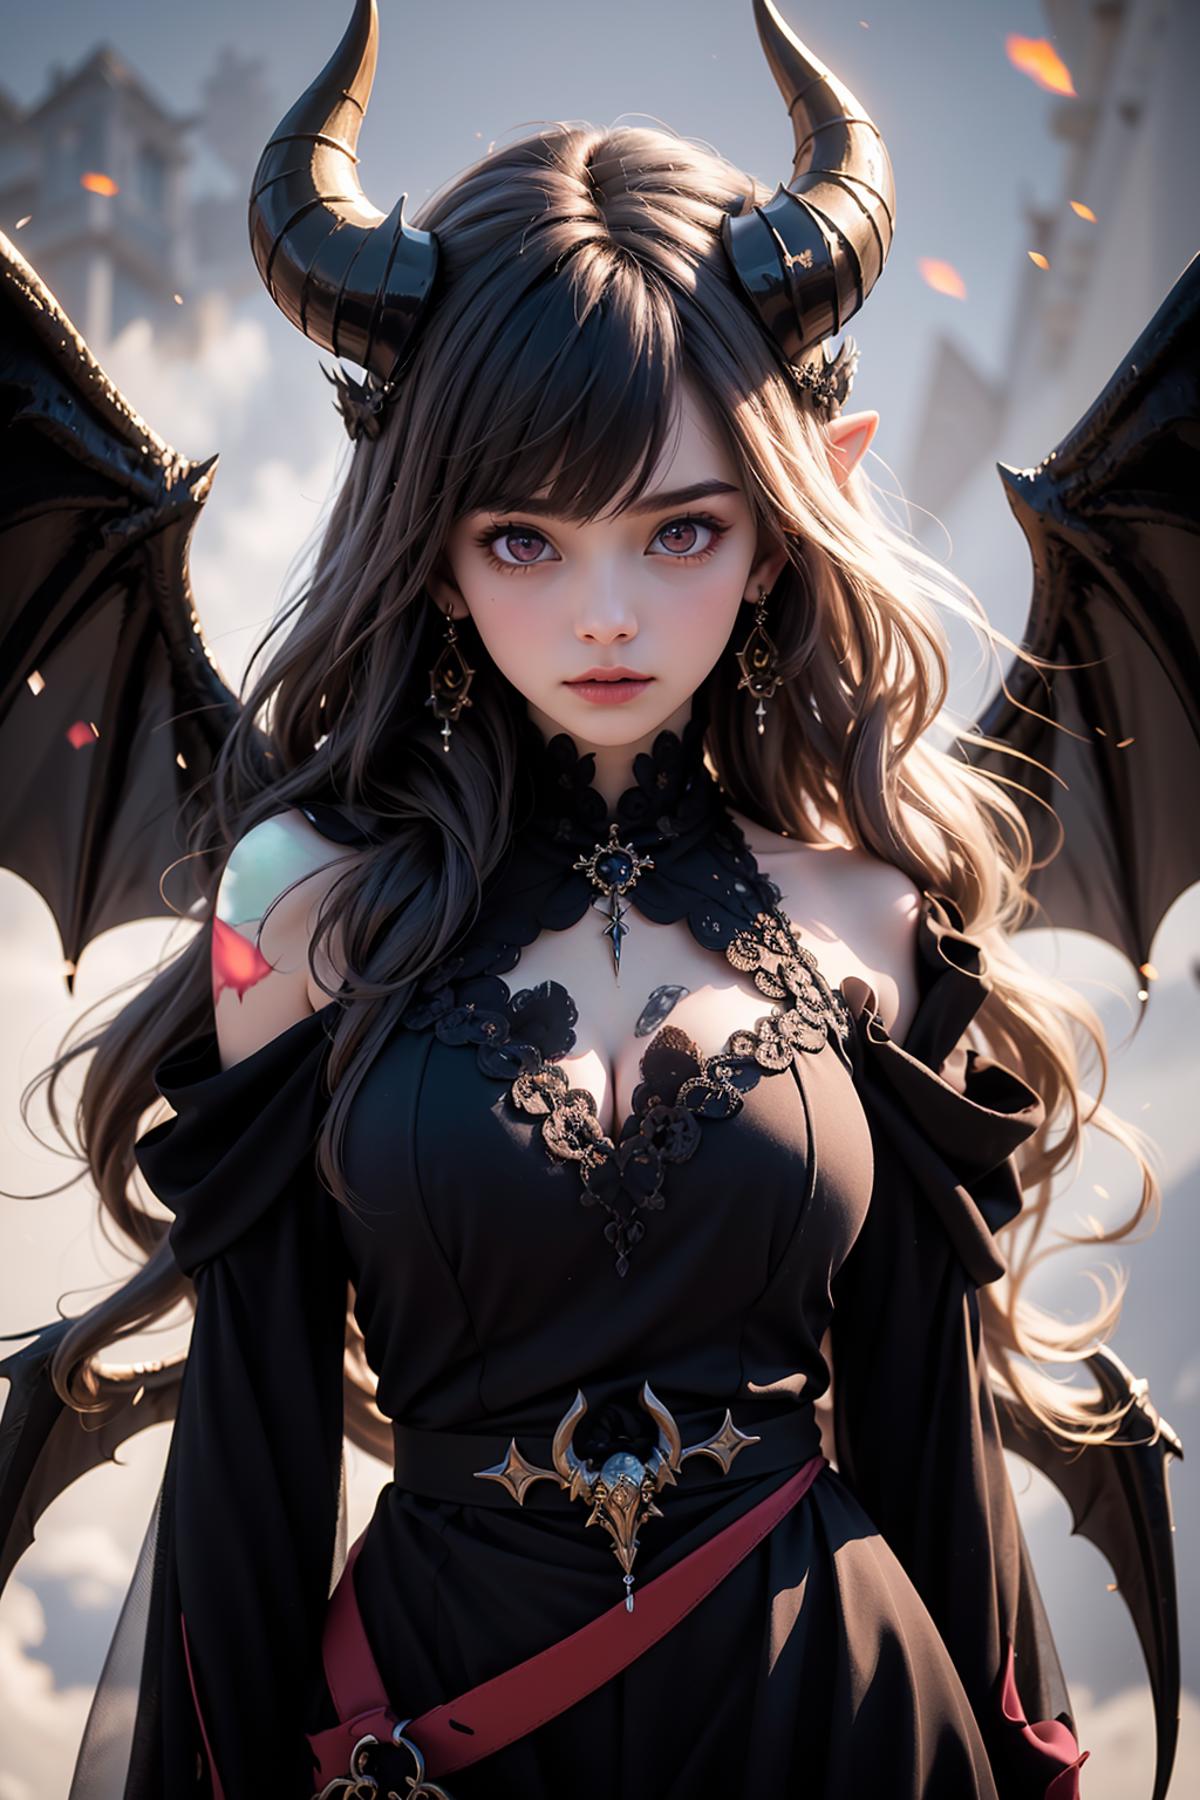 Devil angel image by A_banana